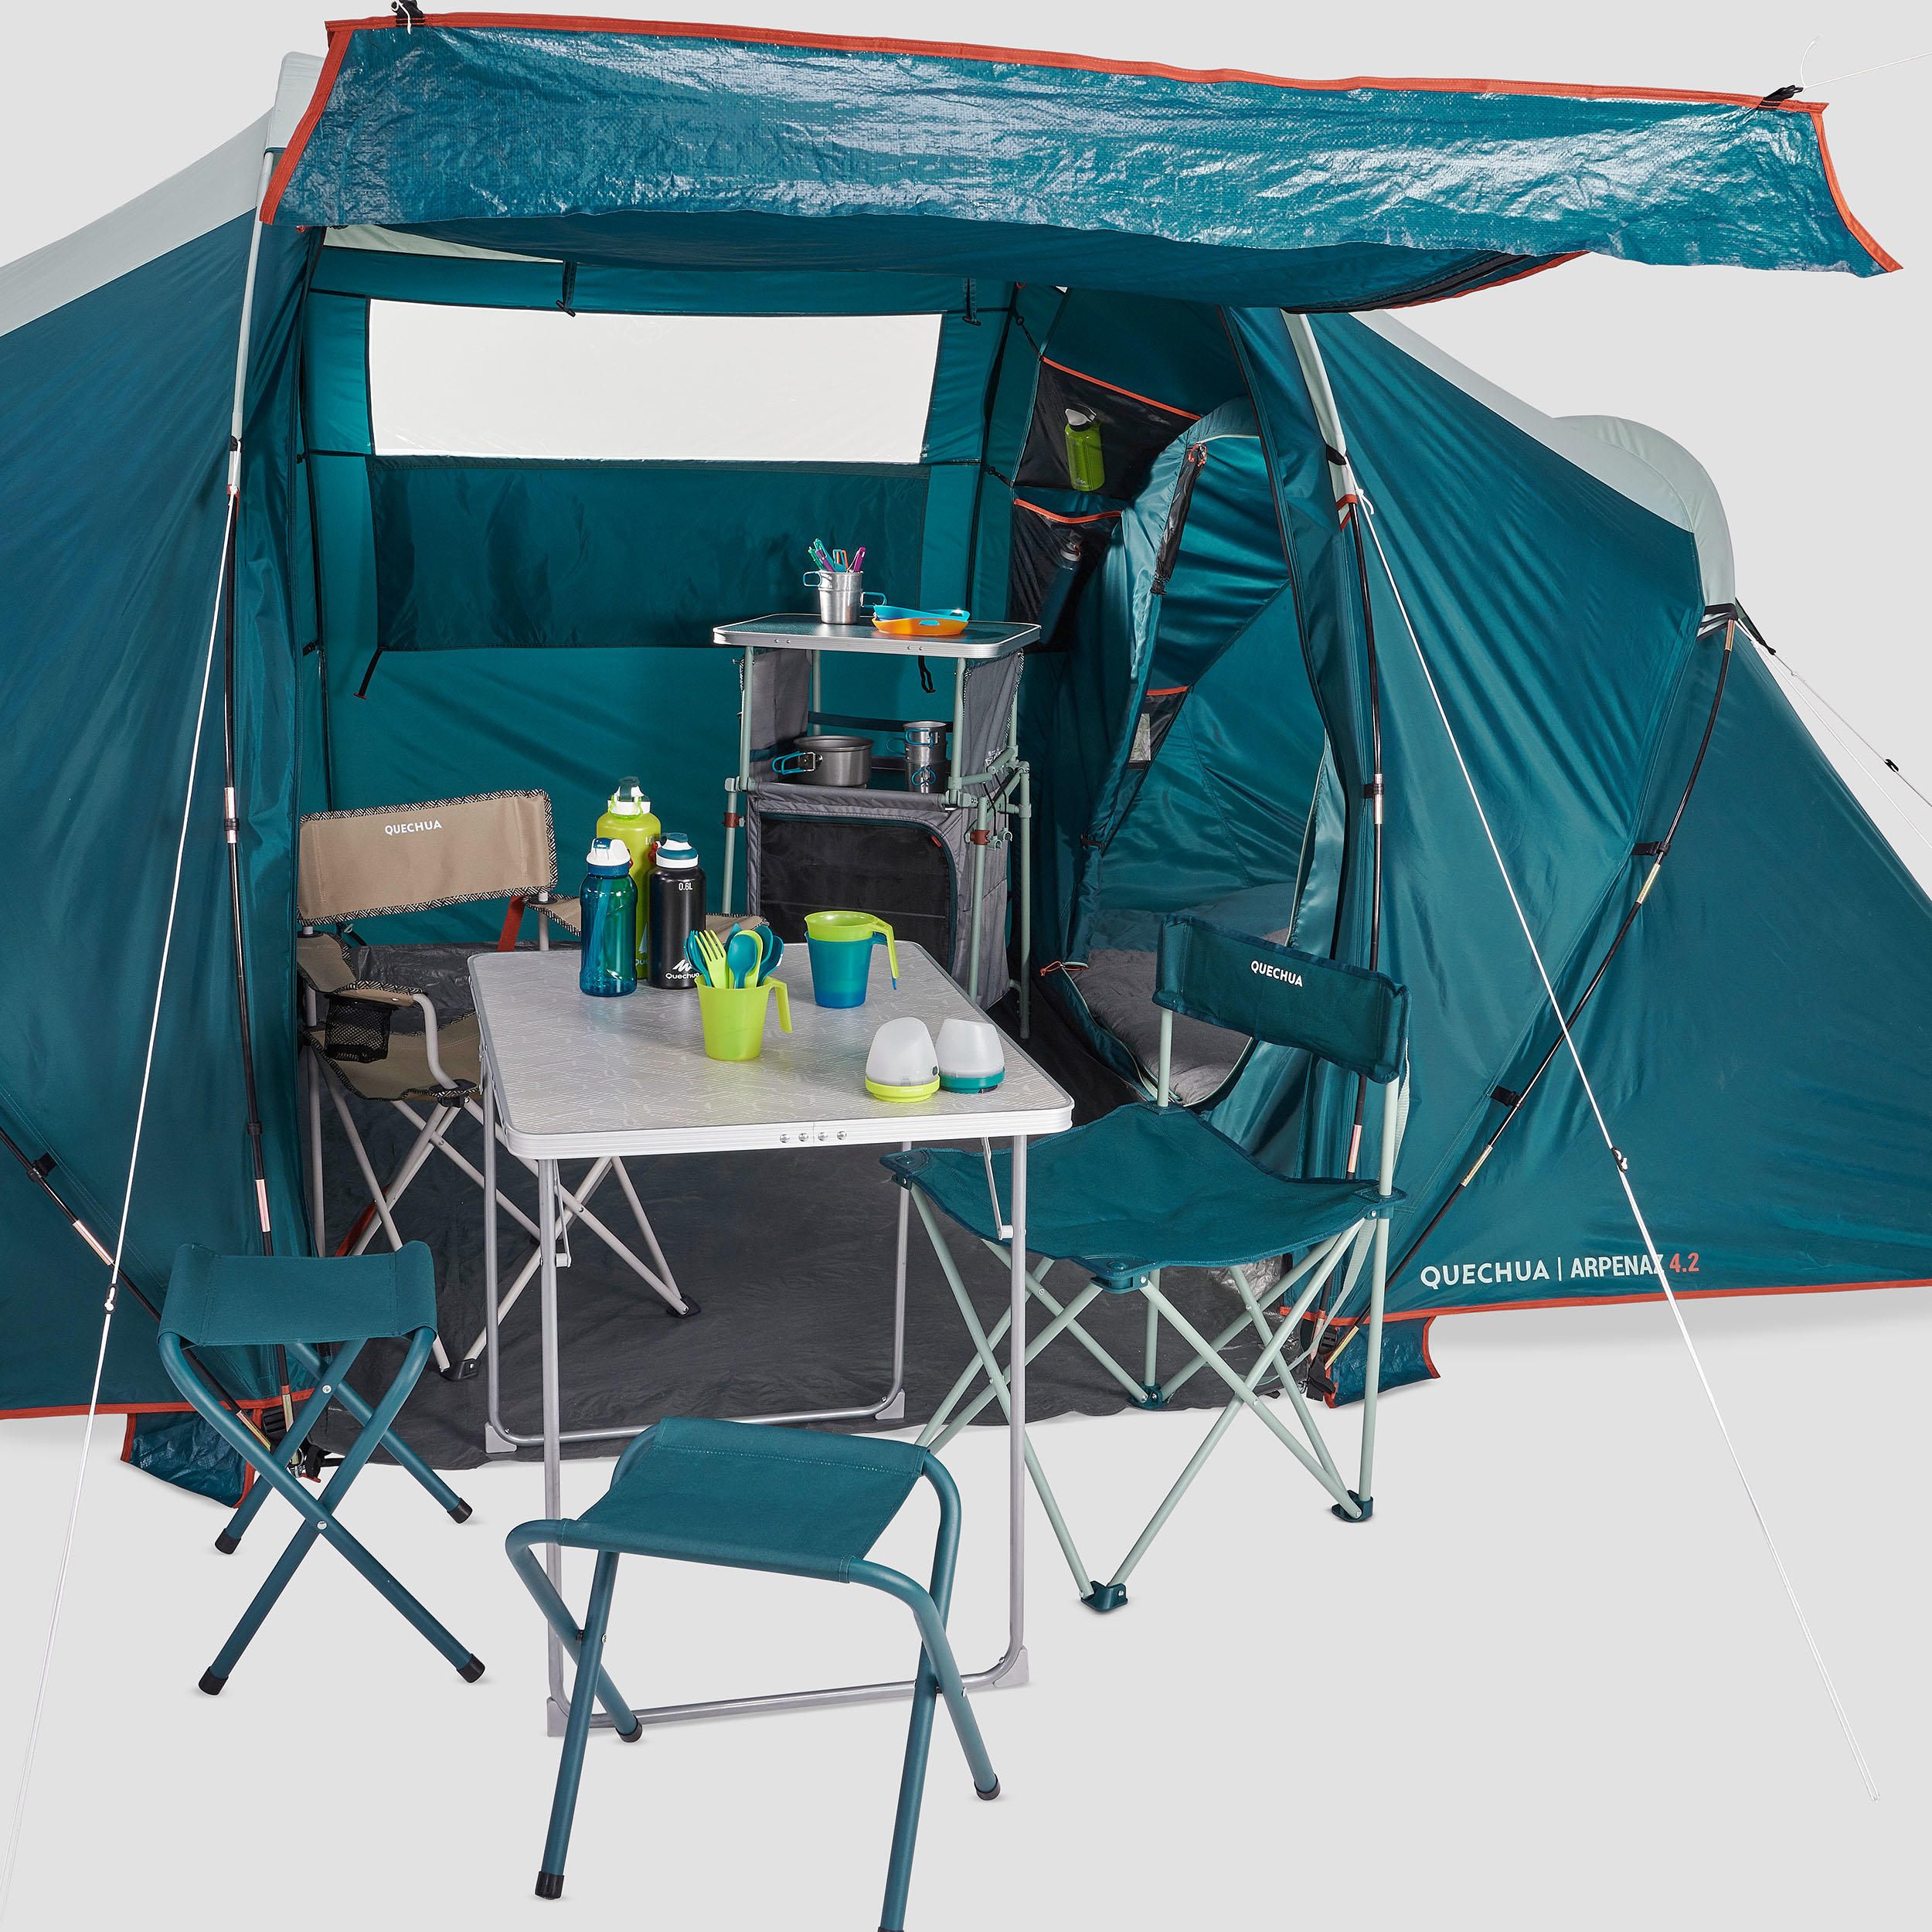 decathlon 4.2 tent